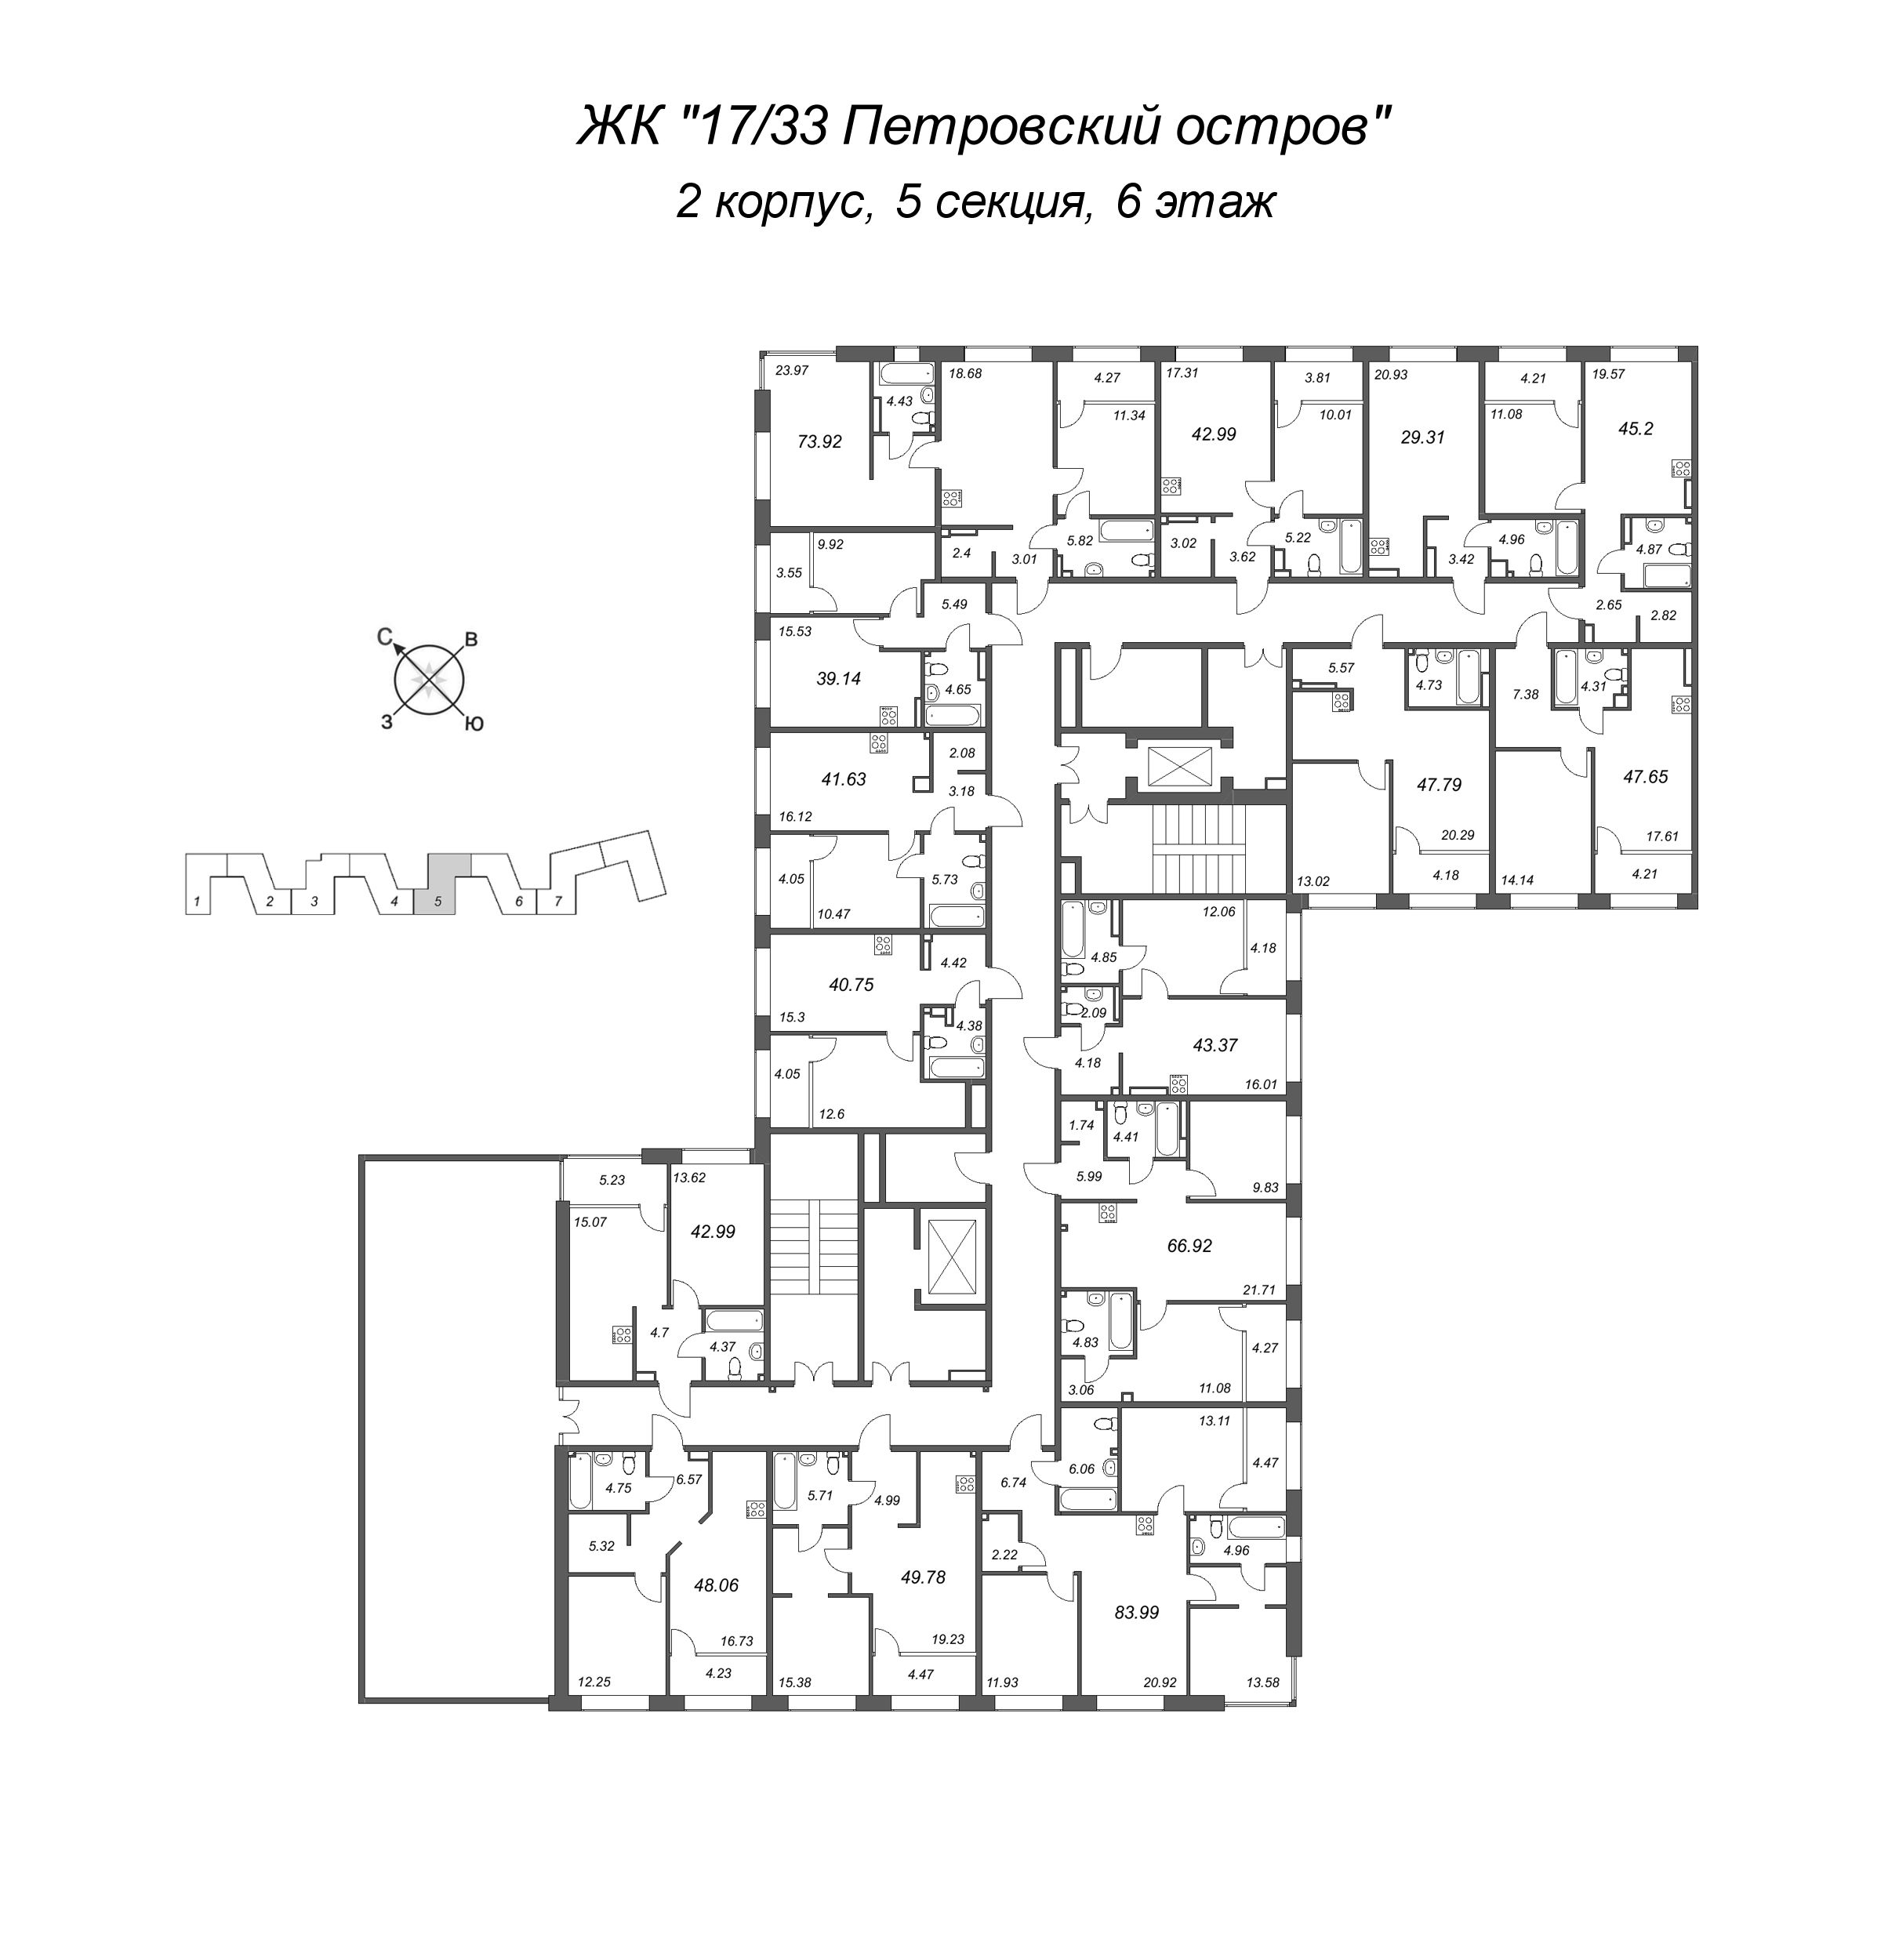 2-комнатная (Евро) квартира, 41.63 м² - планировка этажа